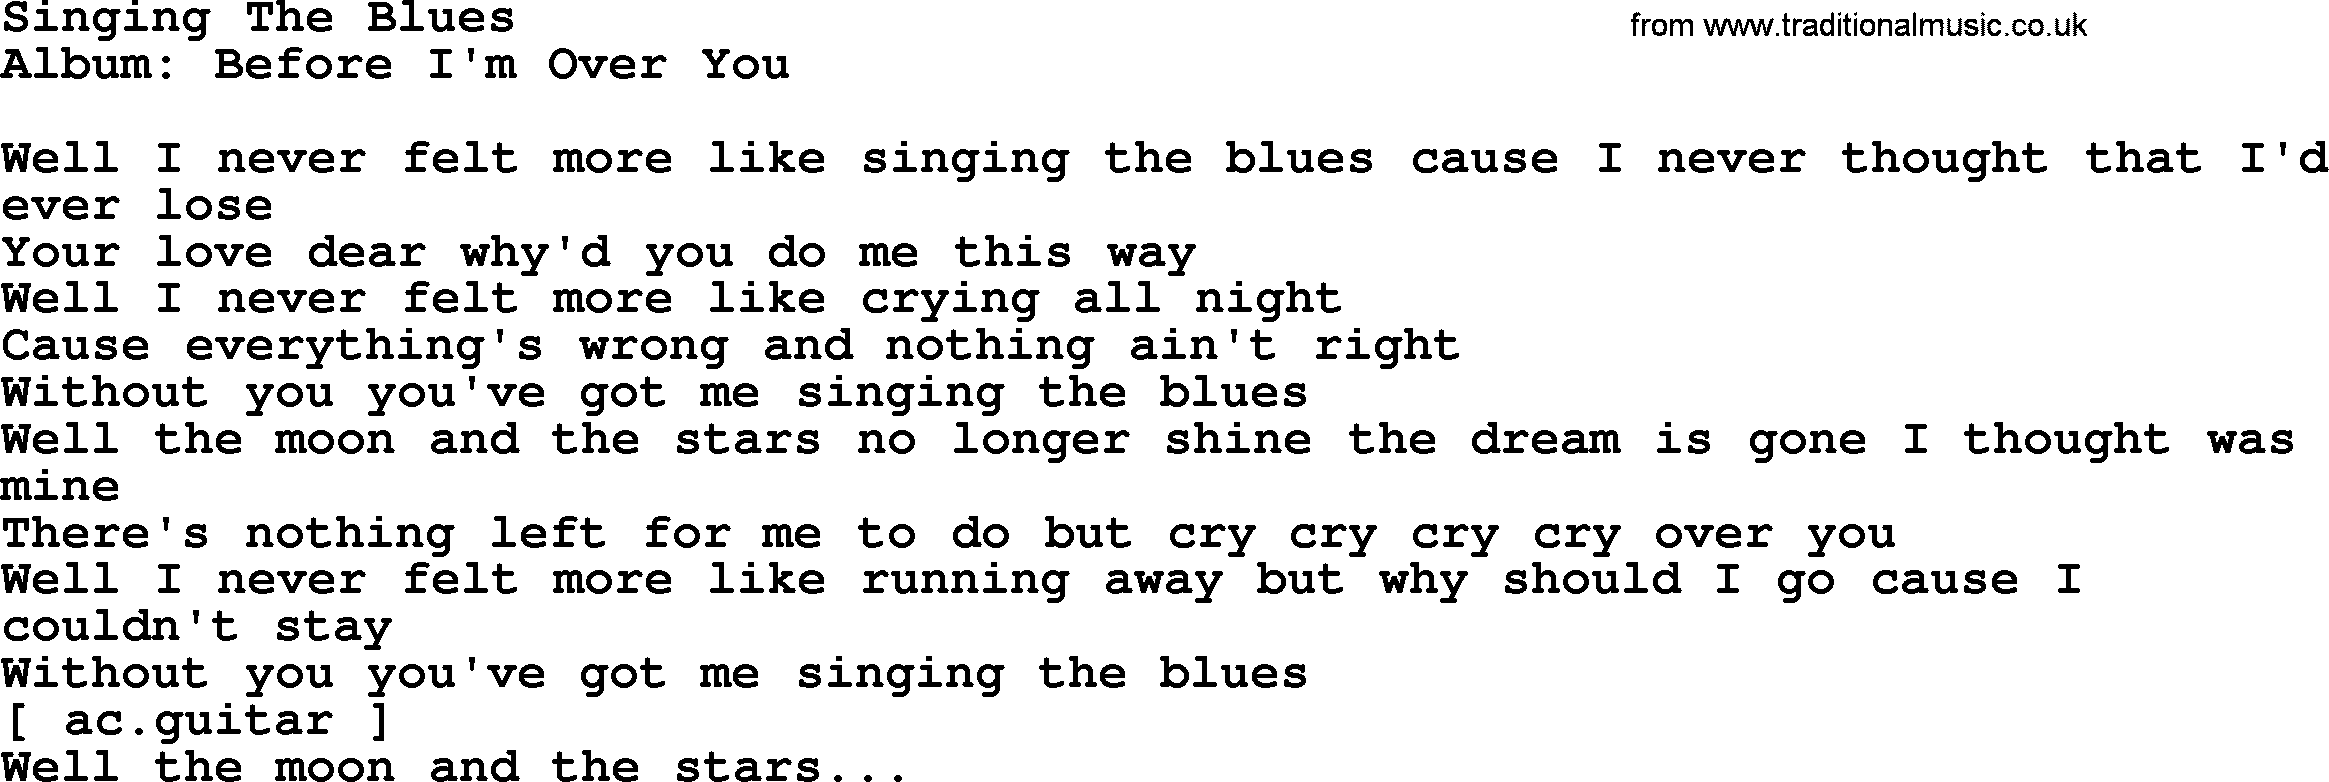 Loretta Lynn song: Singing The Blues lyrics